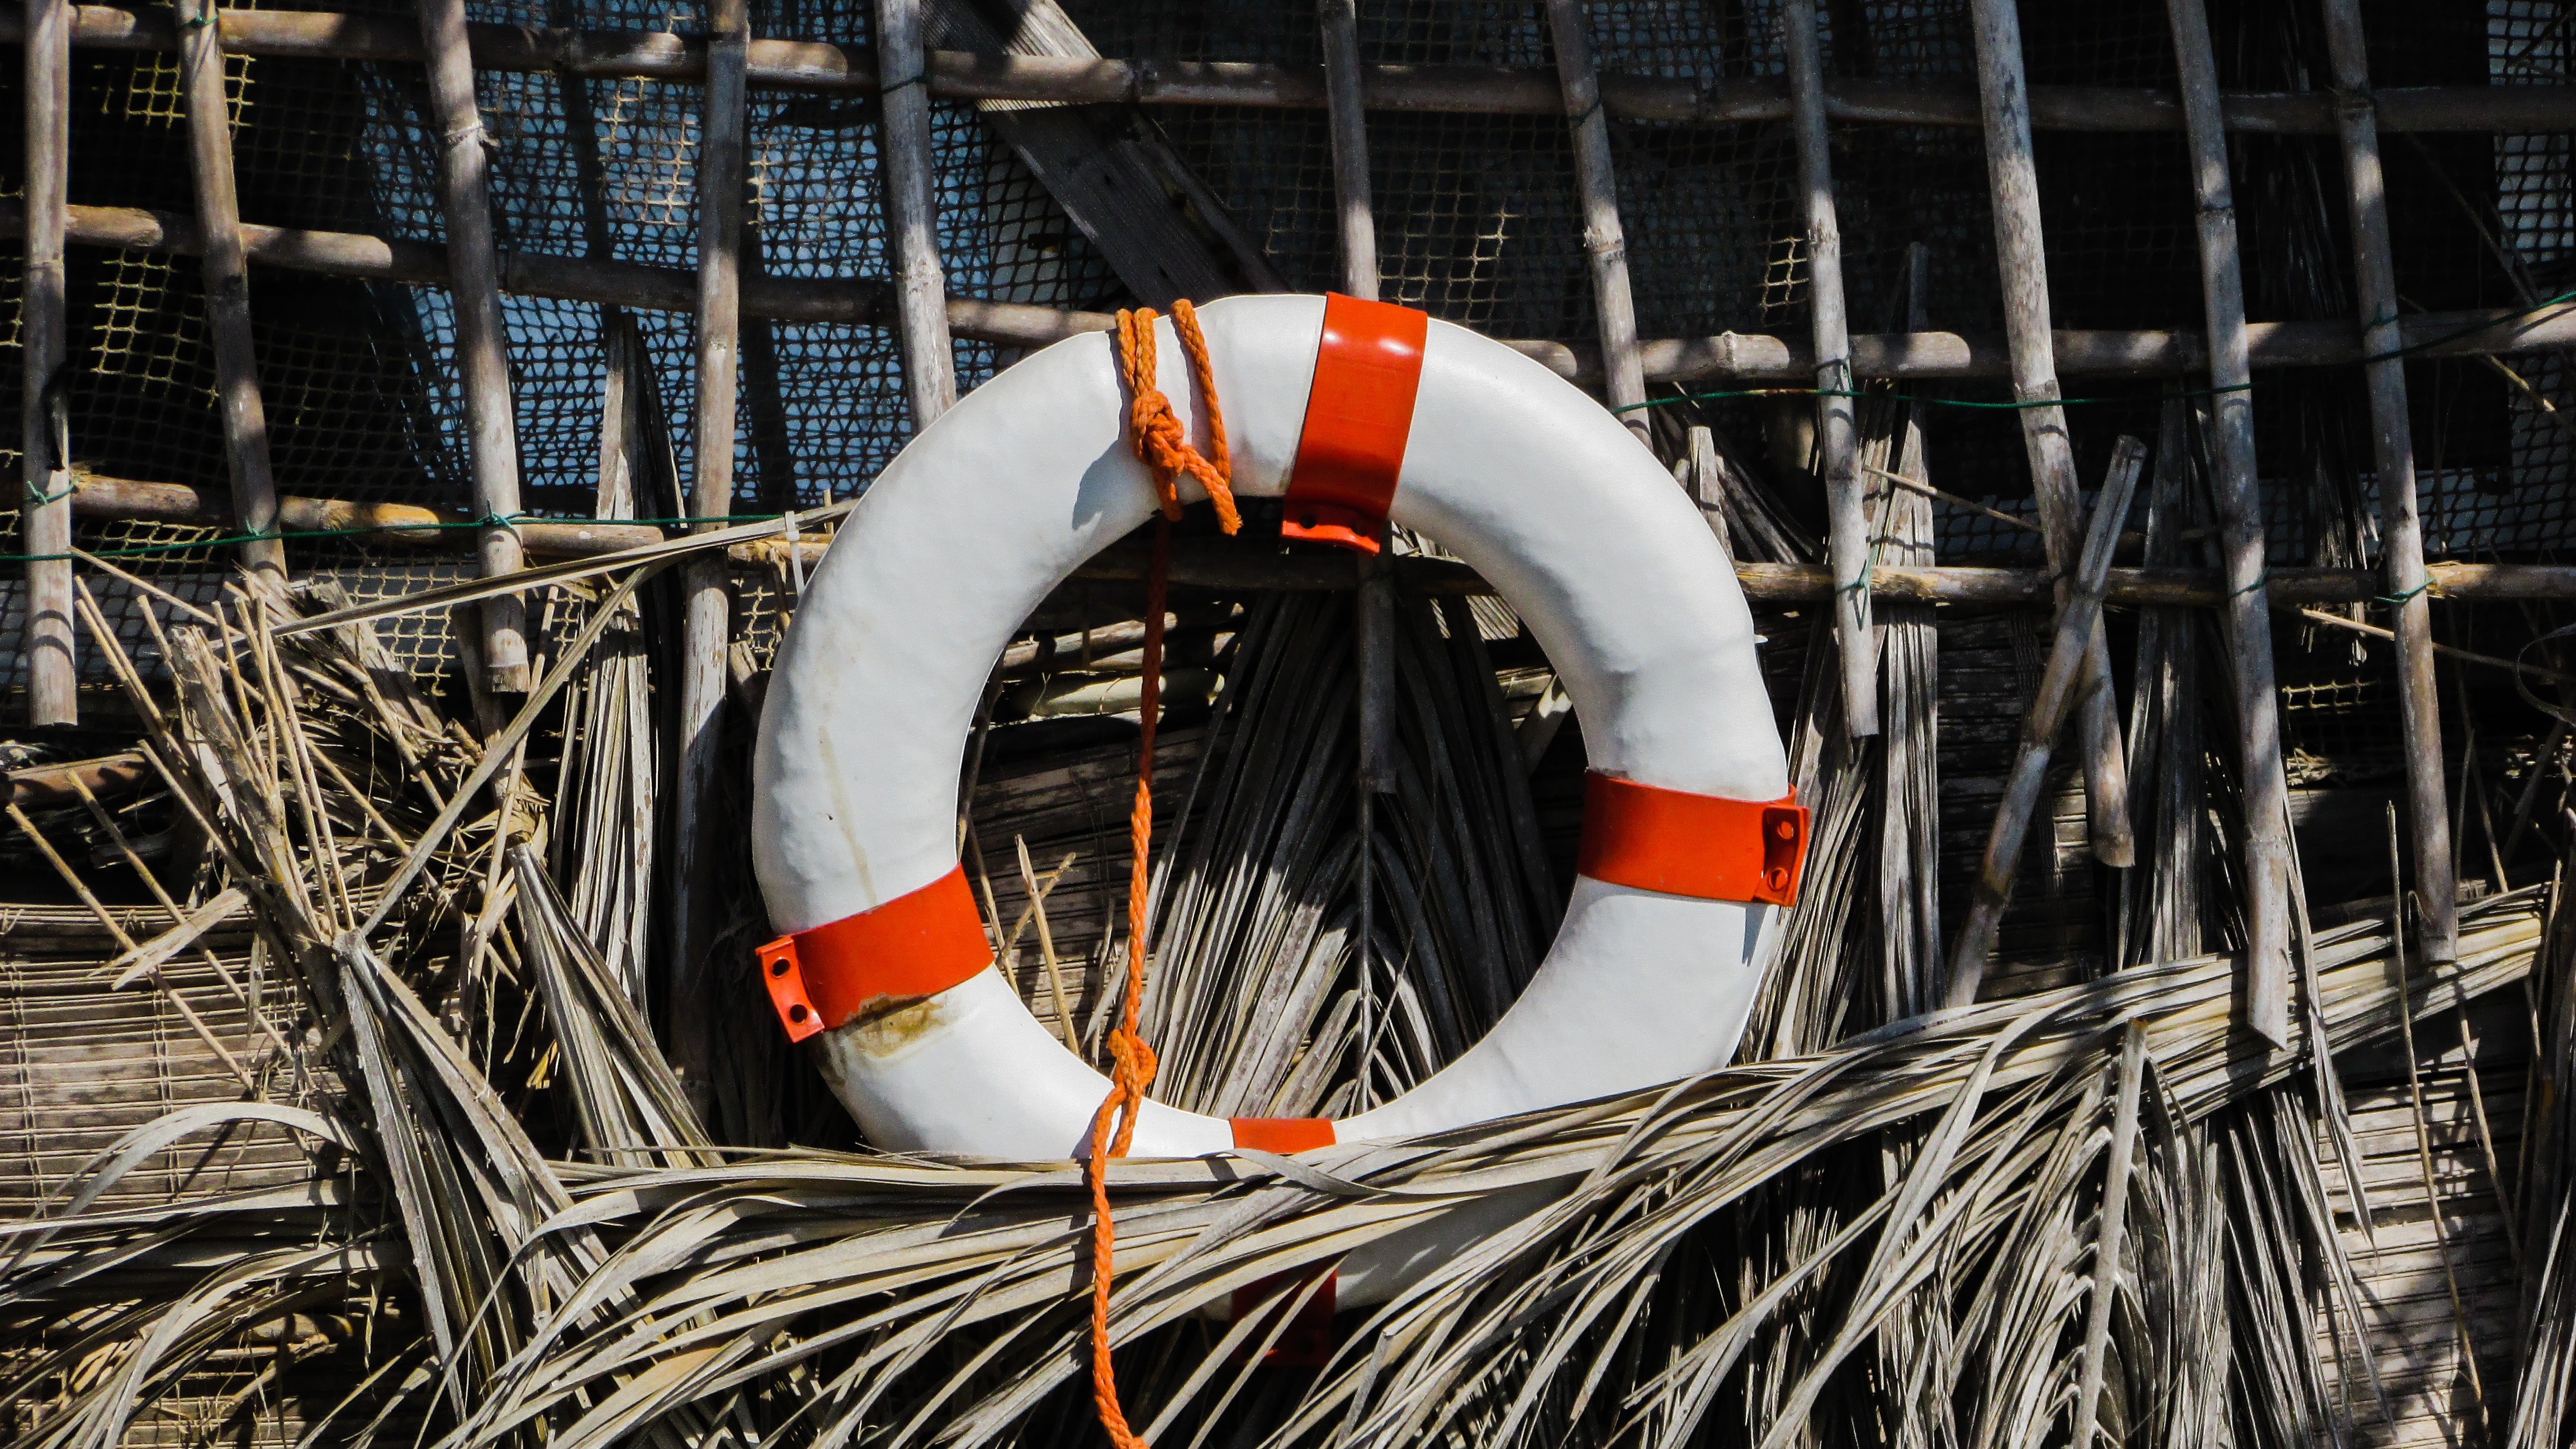 miscellanea, miscellaneous, reeds, equipment, lifebuoy, life buoy Full HD